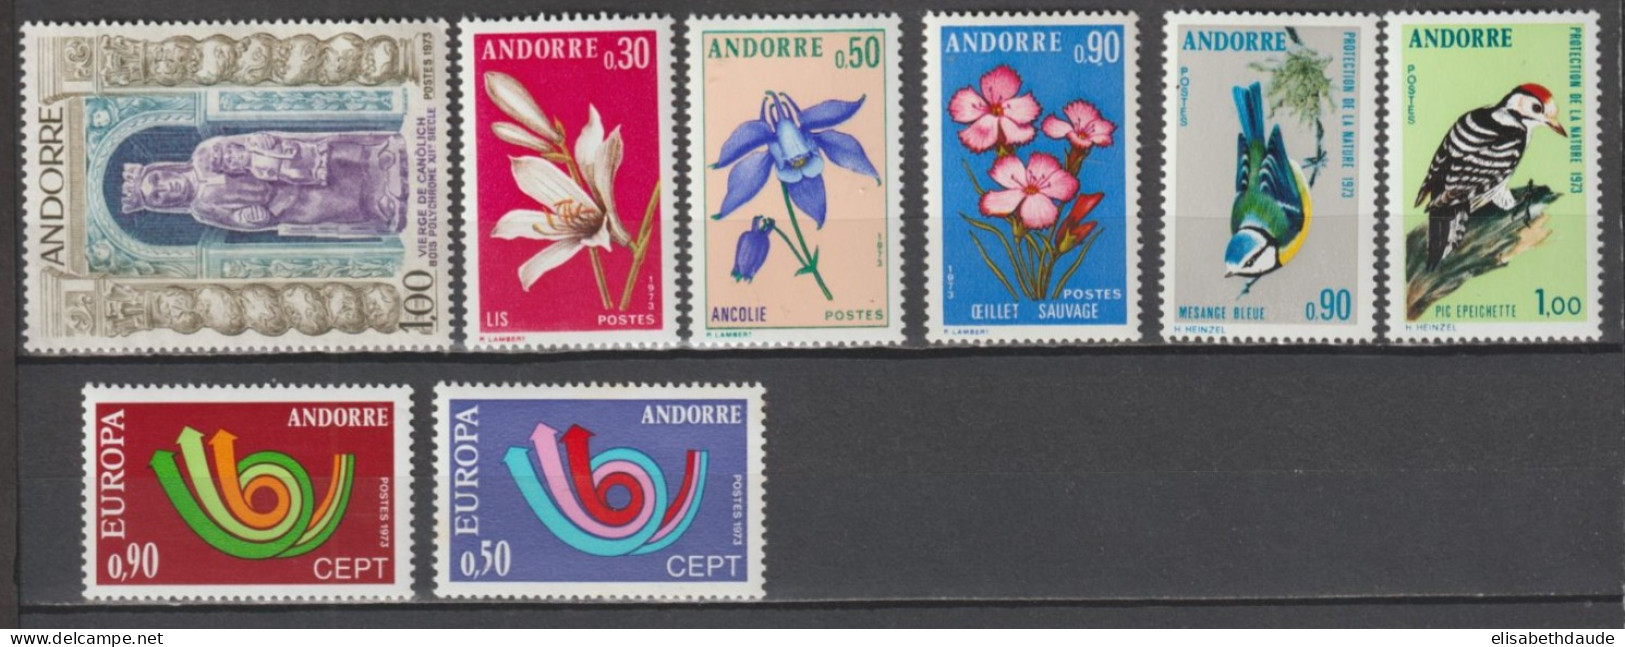 ANDORRE - ANNEE COMPLETE 1973 YVERT N° 226/233 ** MNH - COTE = 51.55 EUR. - - Années Complètes